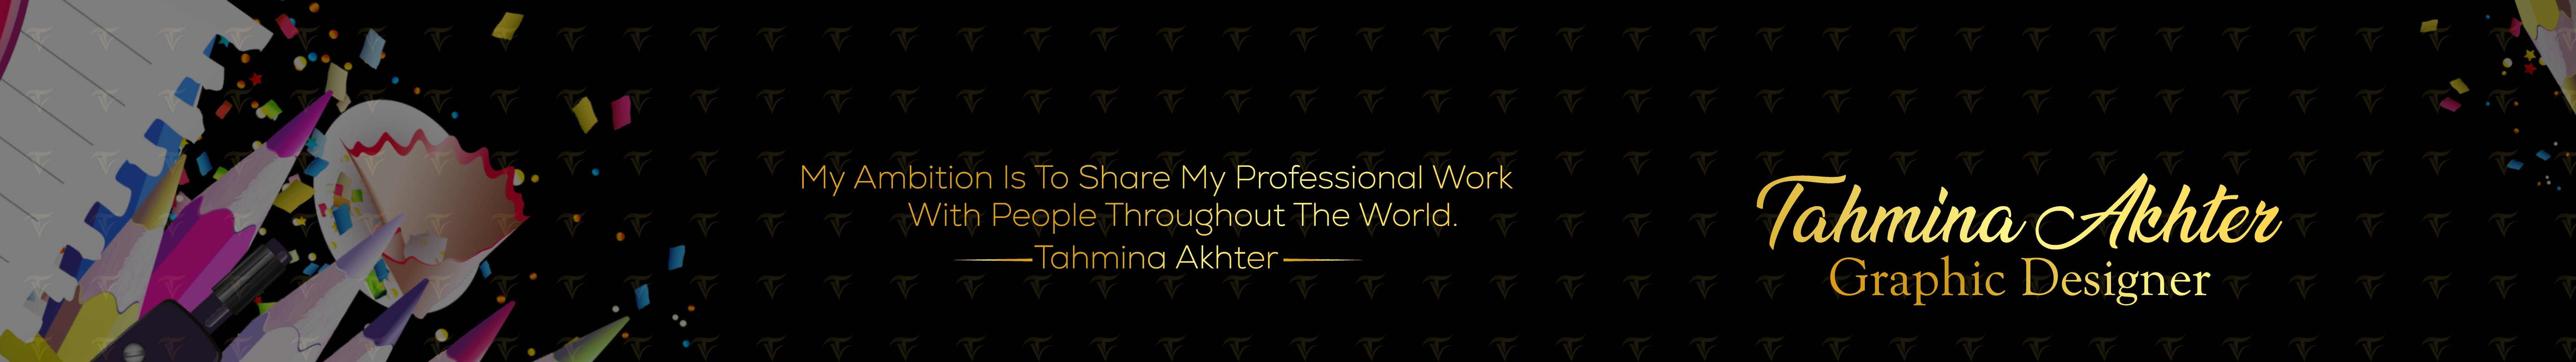 Tahmina Akhter's profile banner